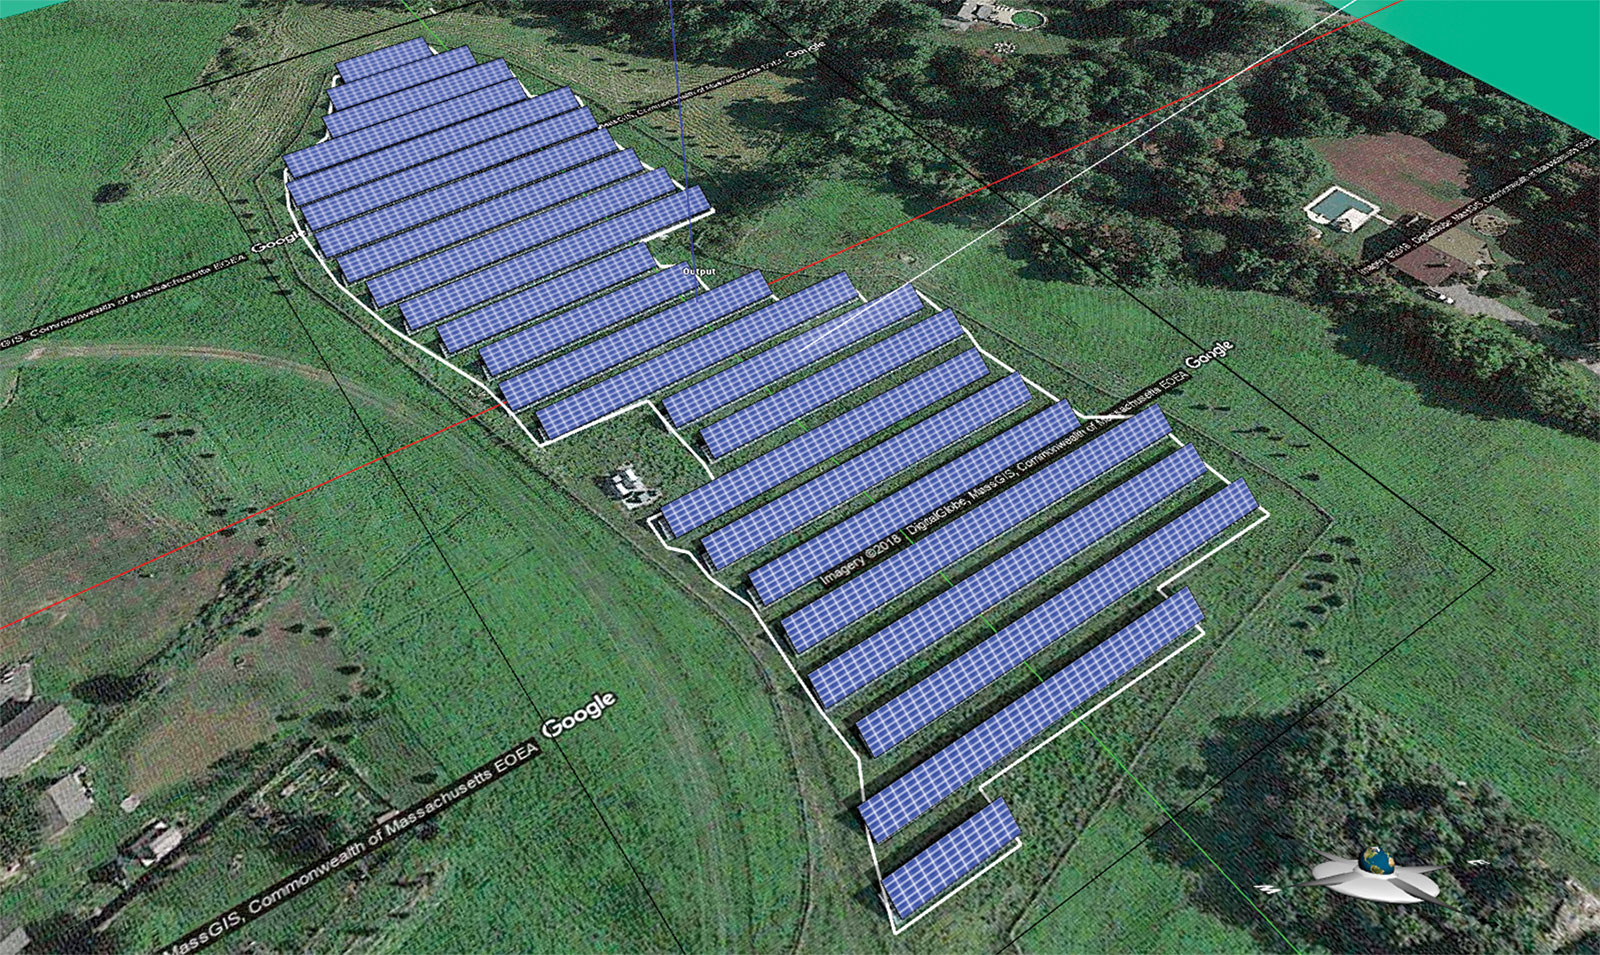 An Energy3D model of an existing solar farm in Massachusetts.